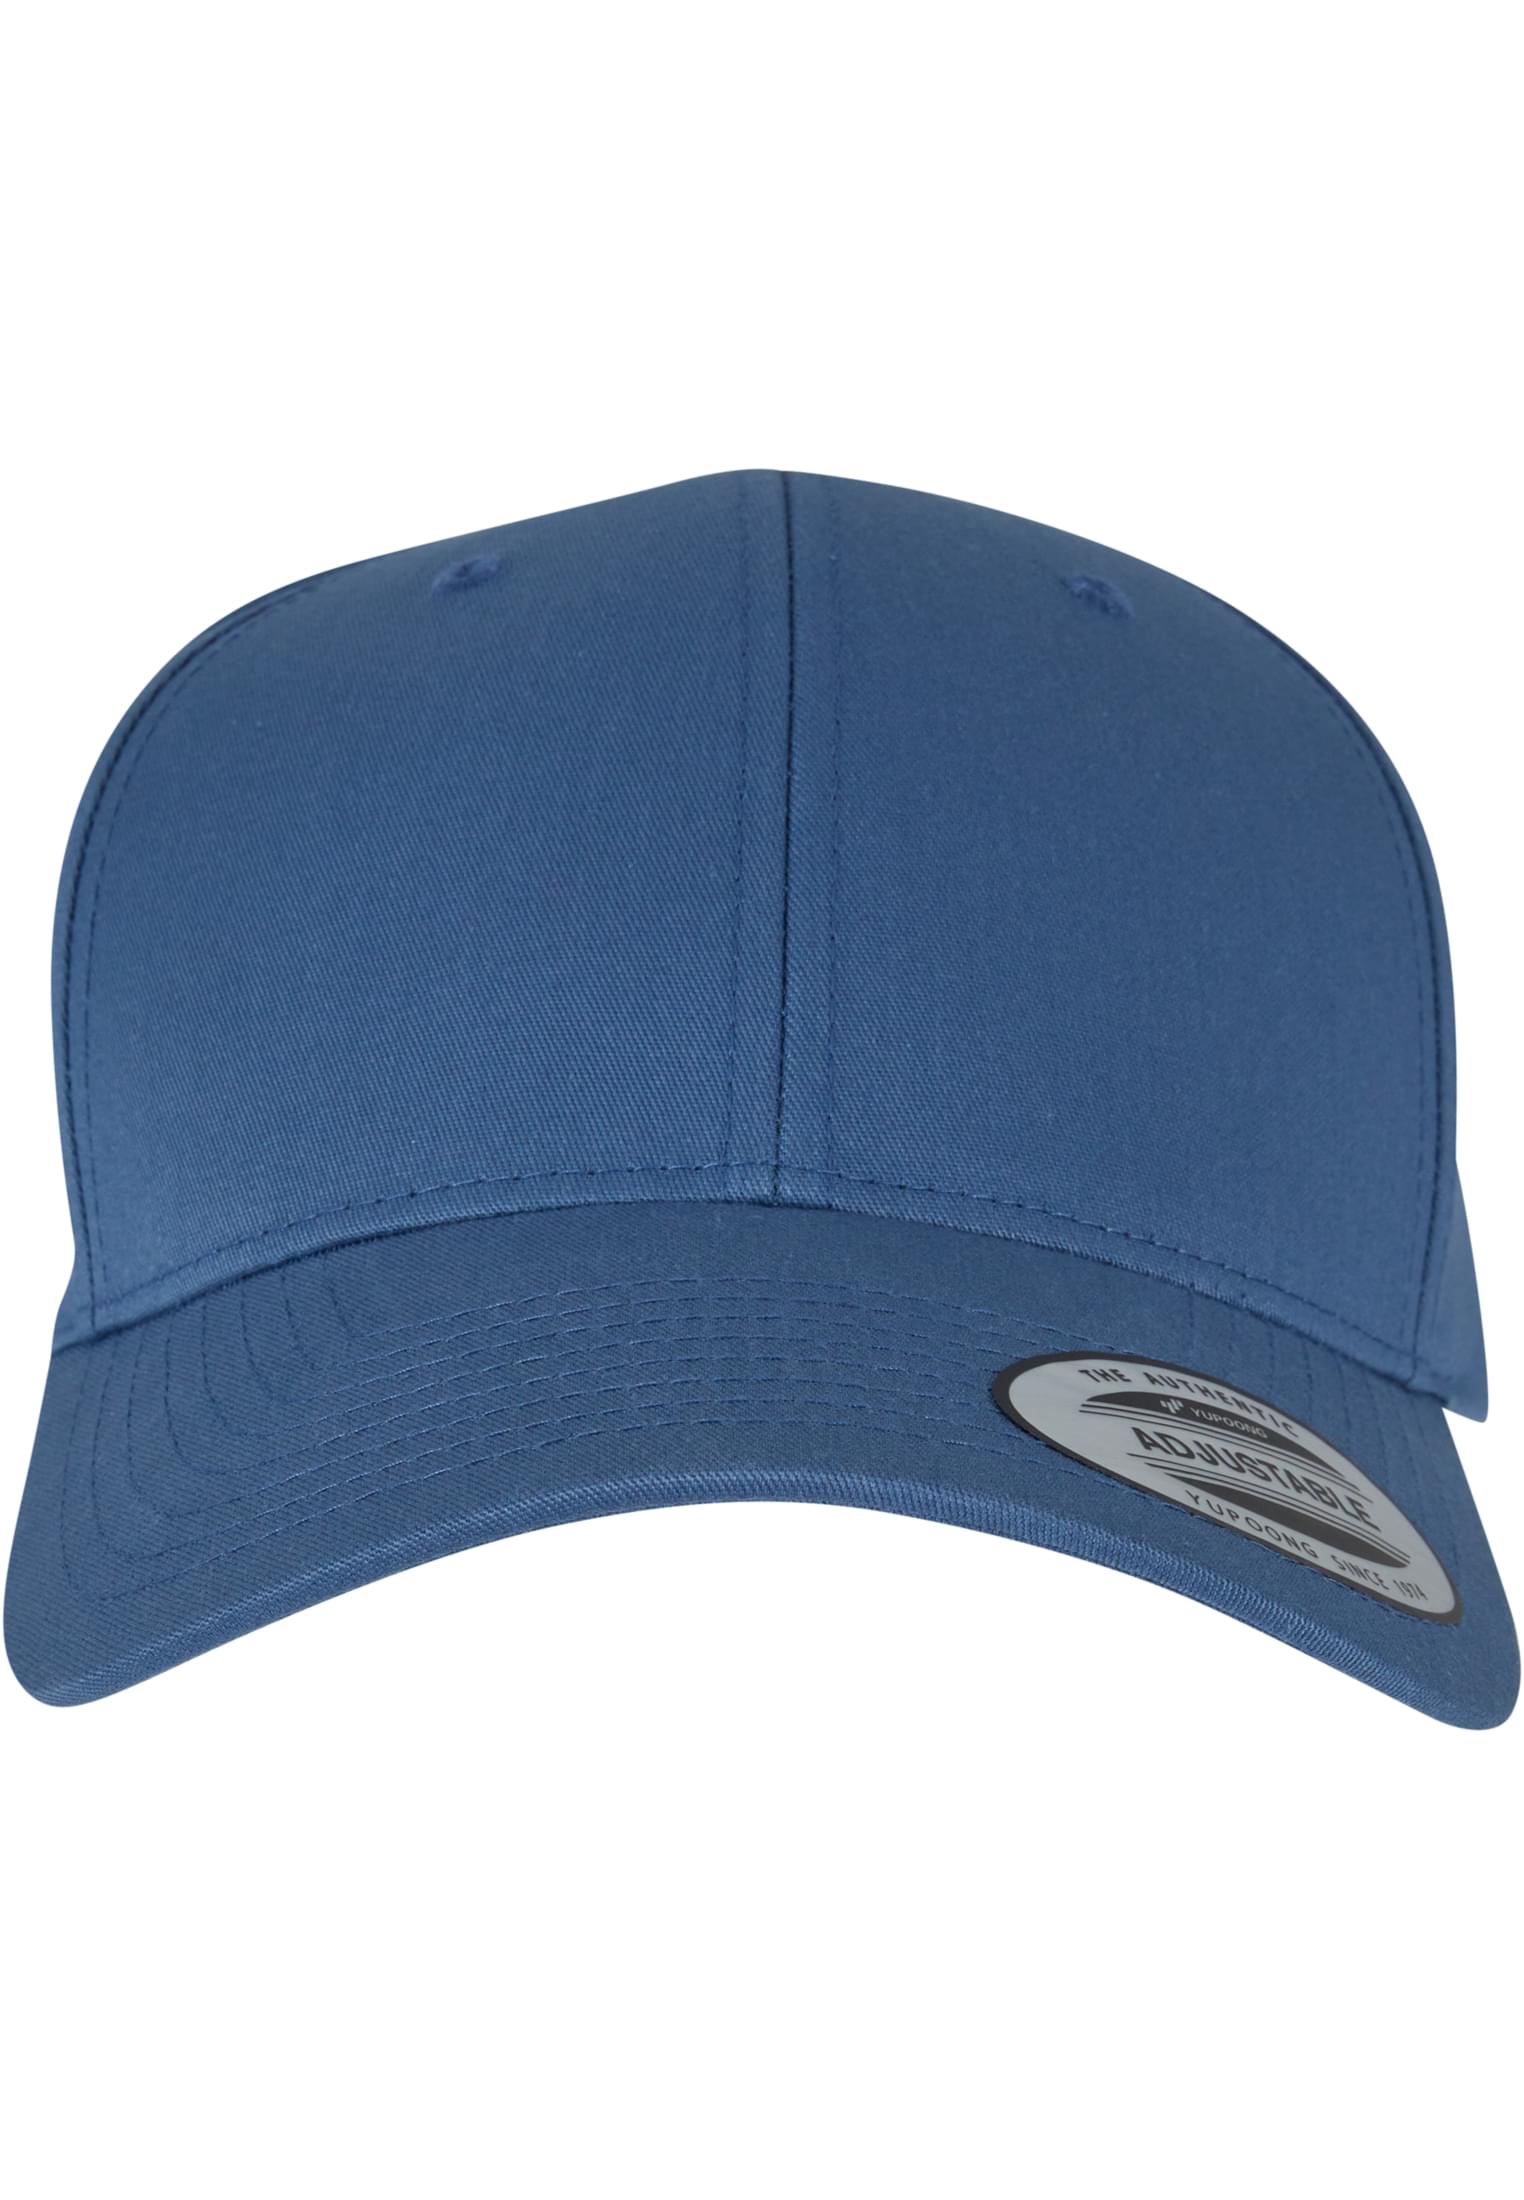 Curved Classic Snapback Cap - Blue